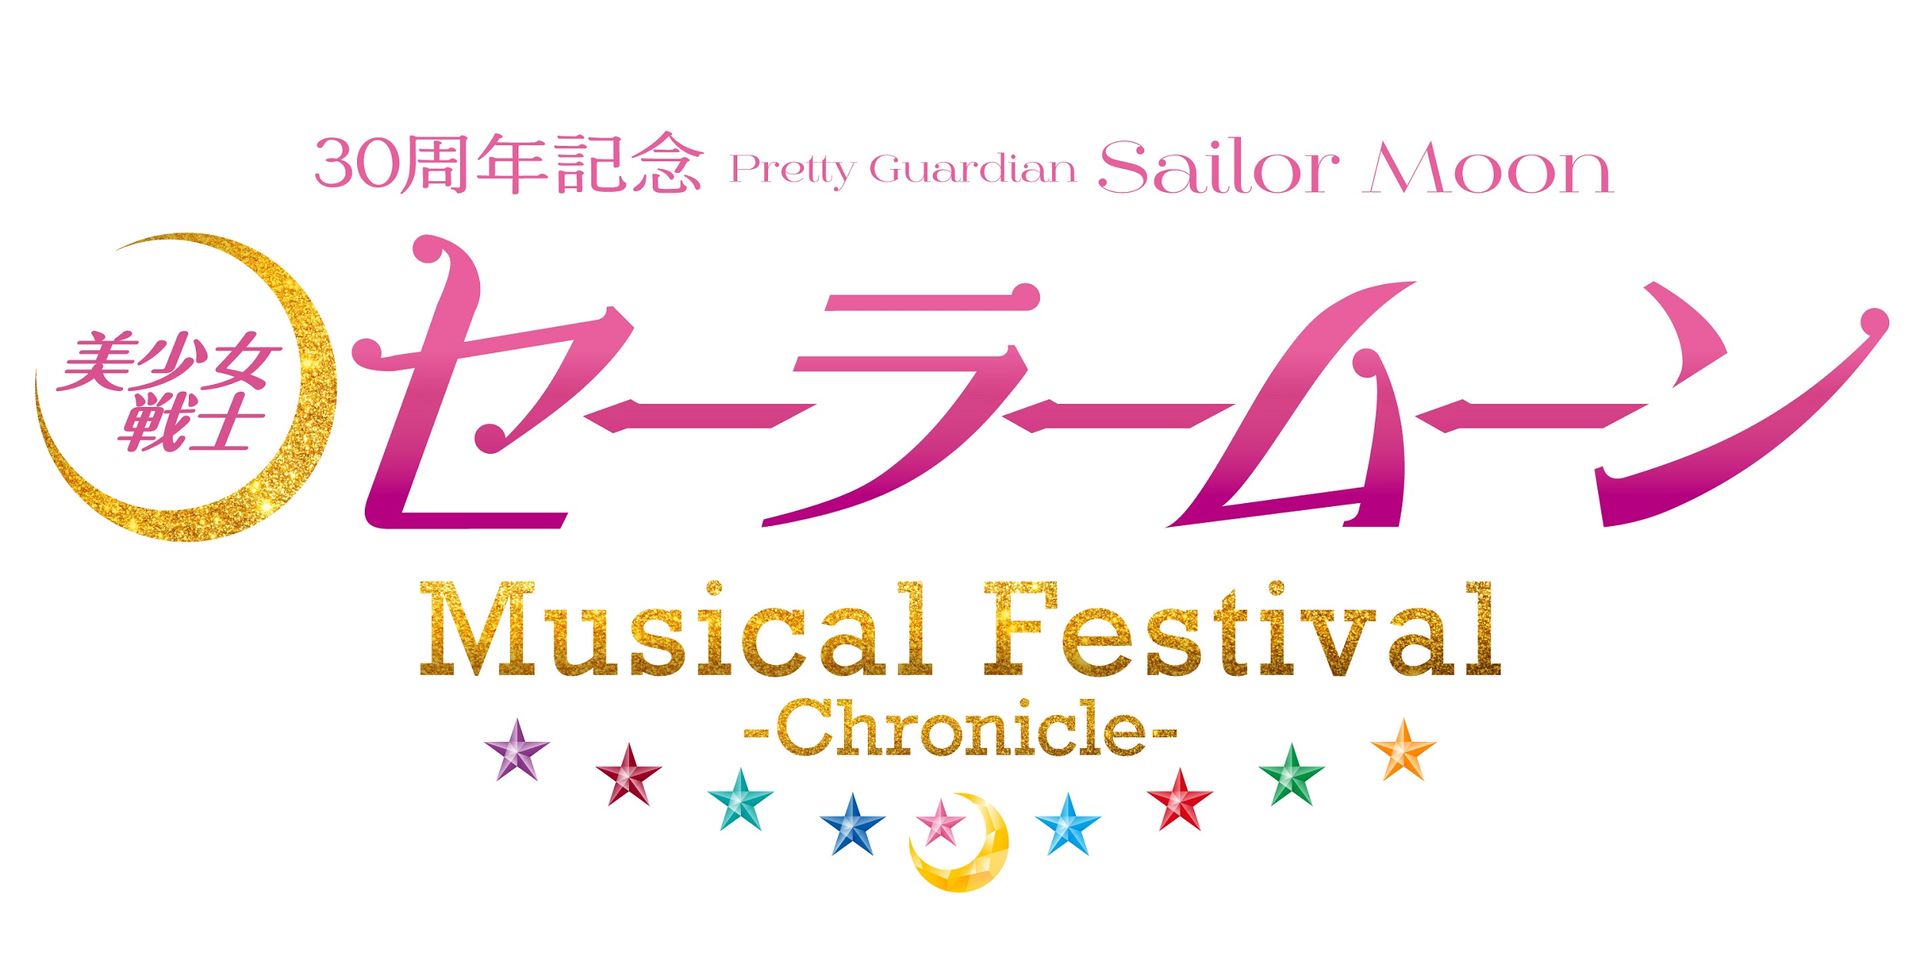 《美少女战士》30周年纪念 Musical Festival −Chronicle−